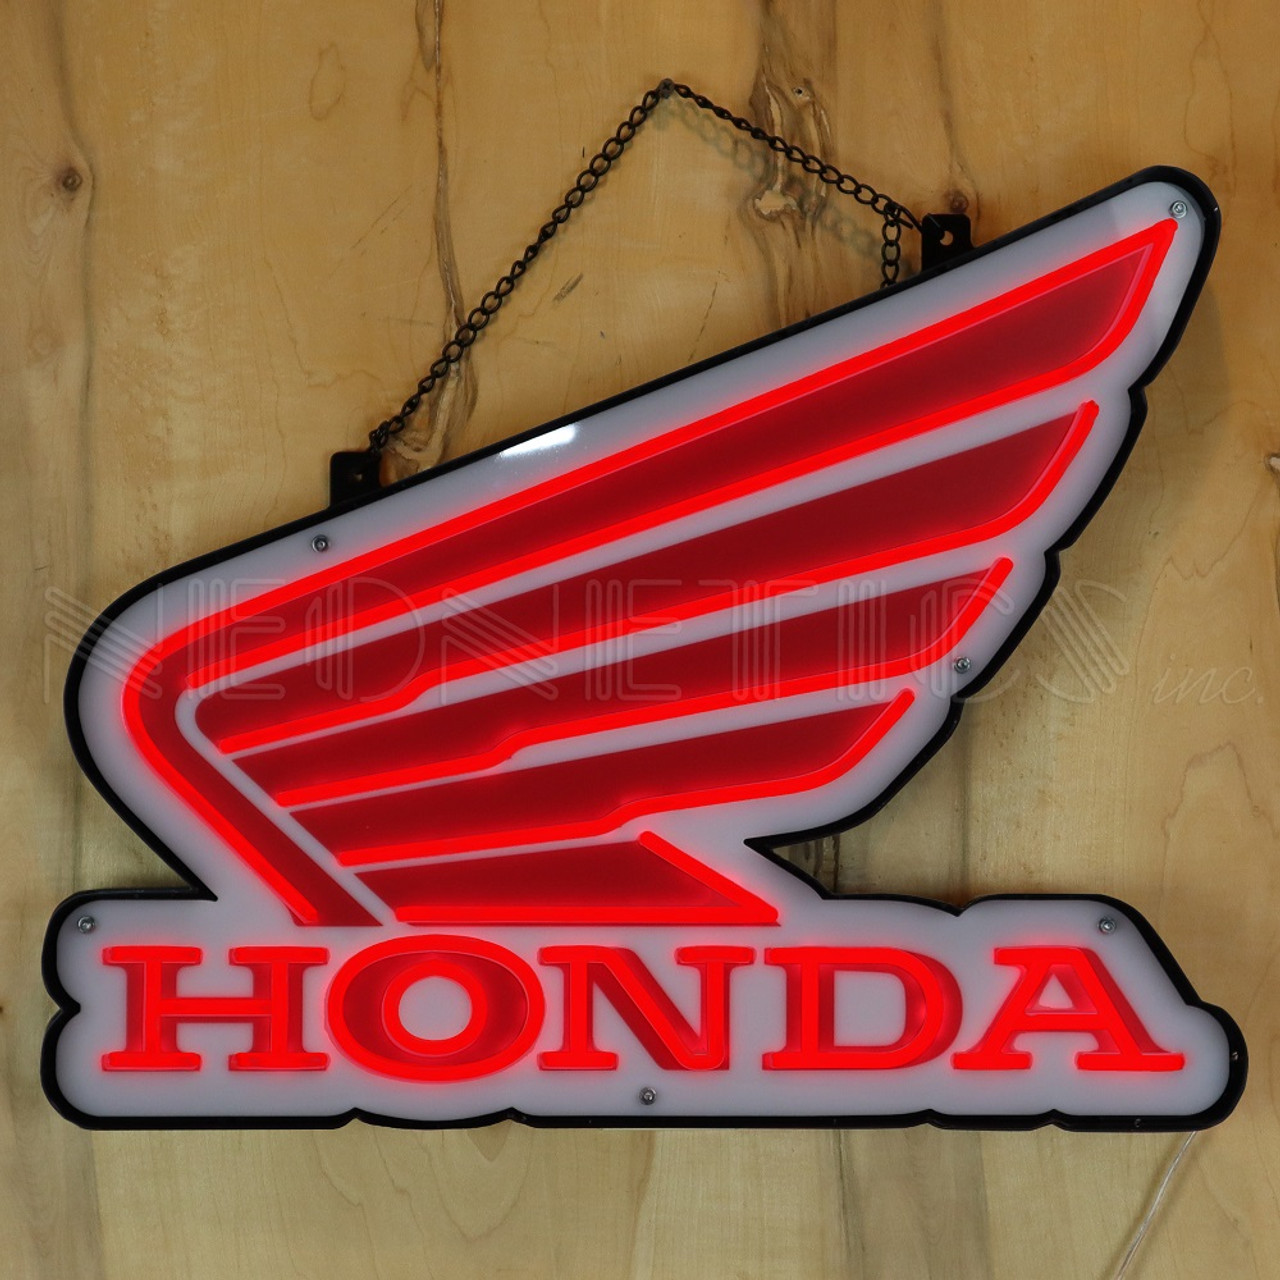 Honda LED Flex Neon Sign (against wood background)